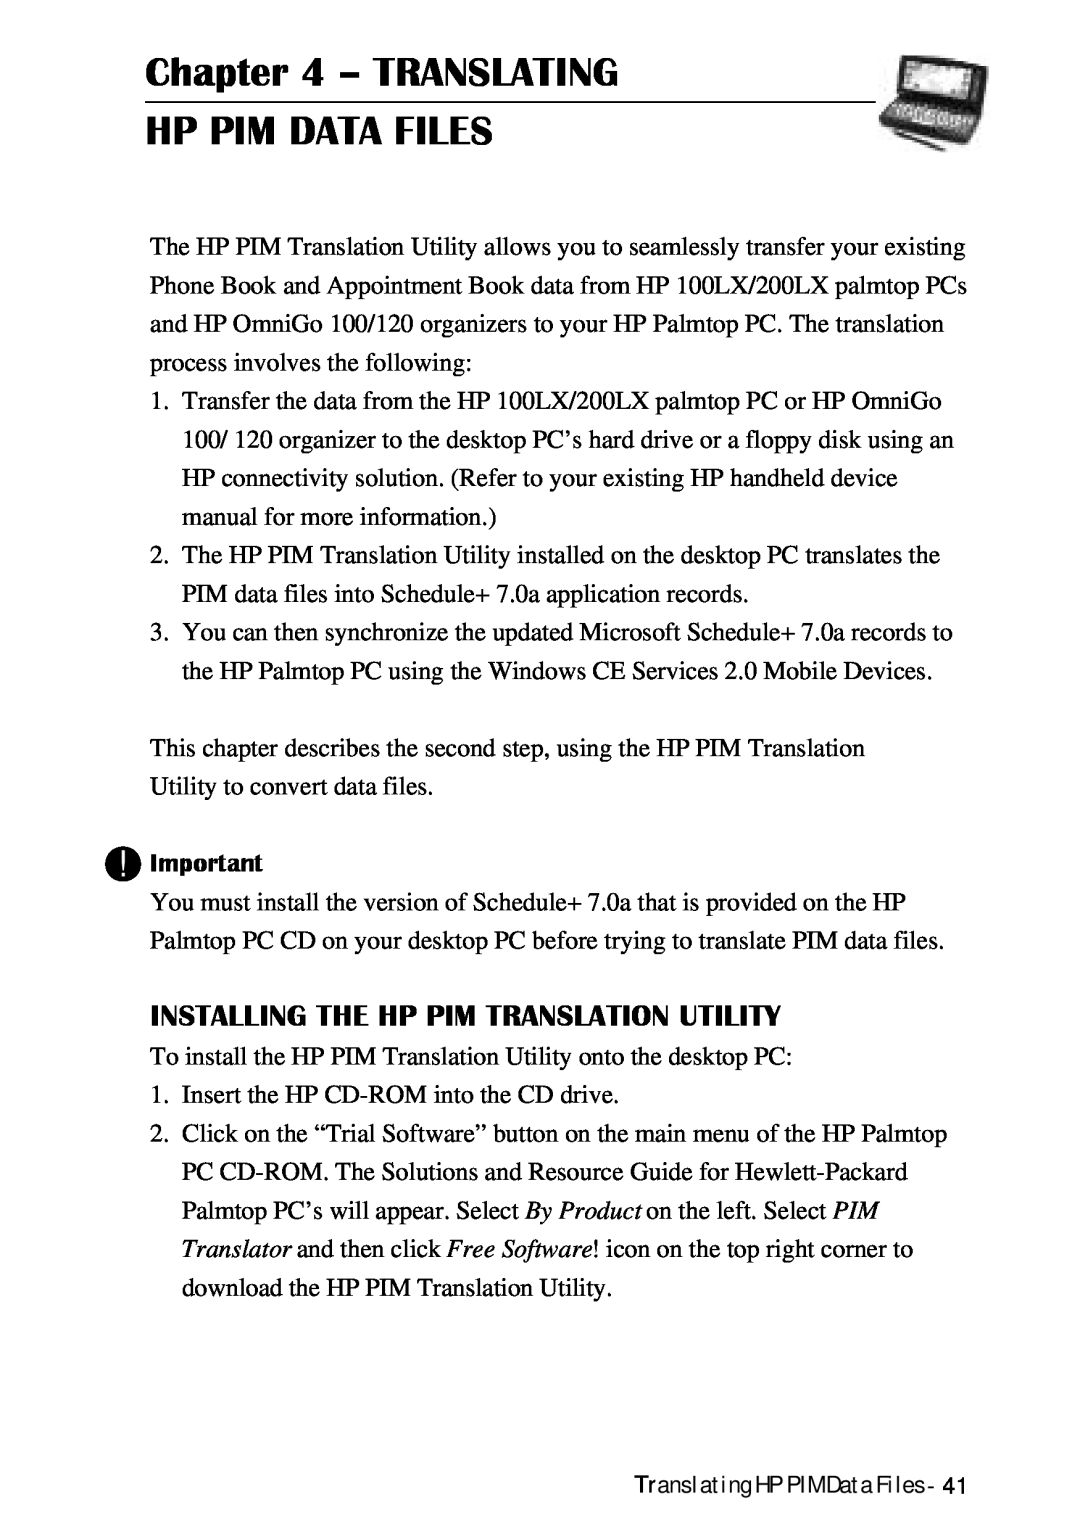 HP Palmtop 620X, Palmtop 660LX manual Translating Hp Pim Data Files, Installing The Hp Pim Translation Utility 